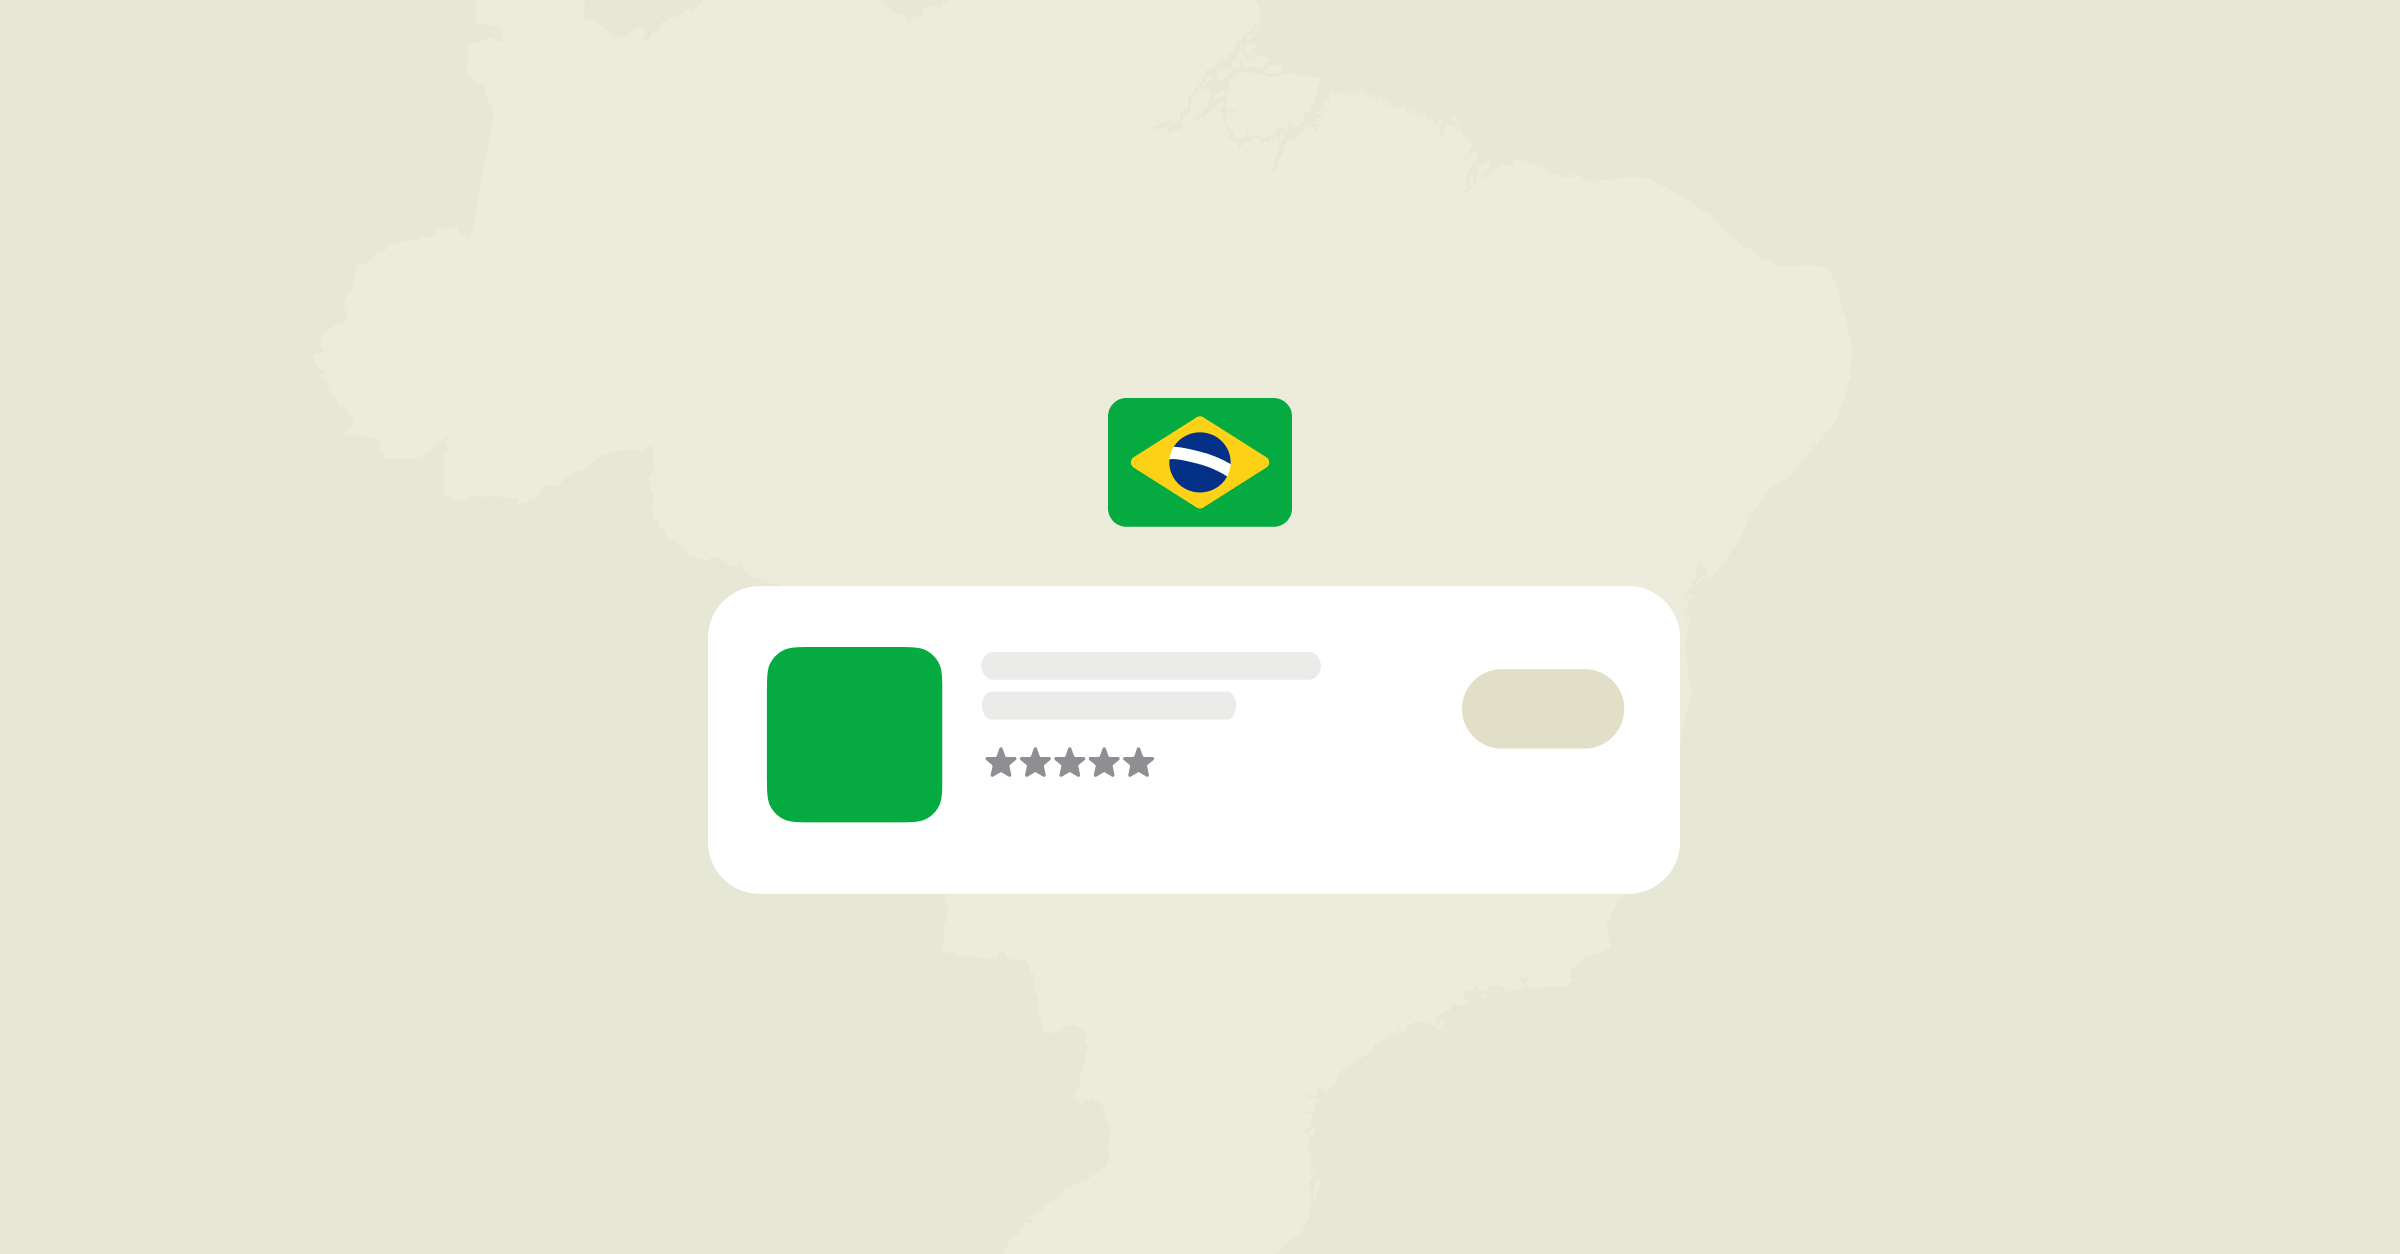 the brazilian alphabet｜TikTok Search